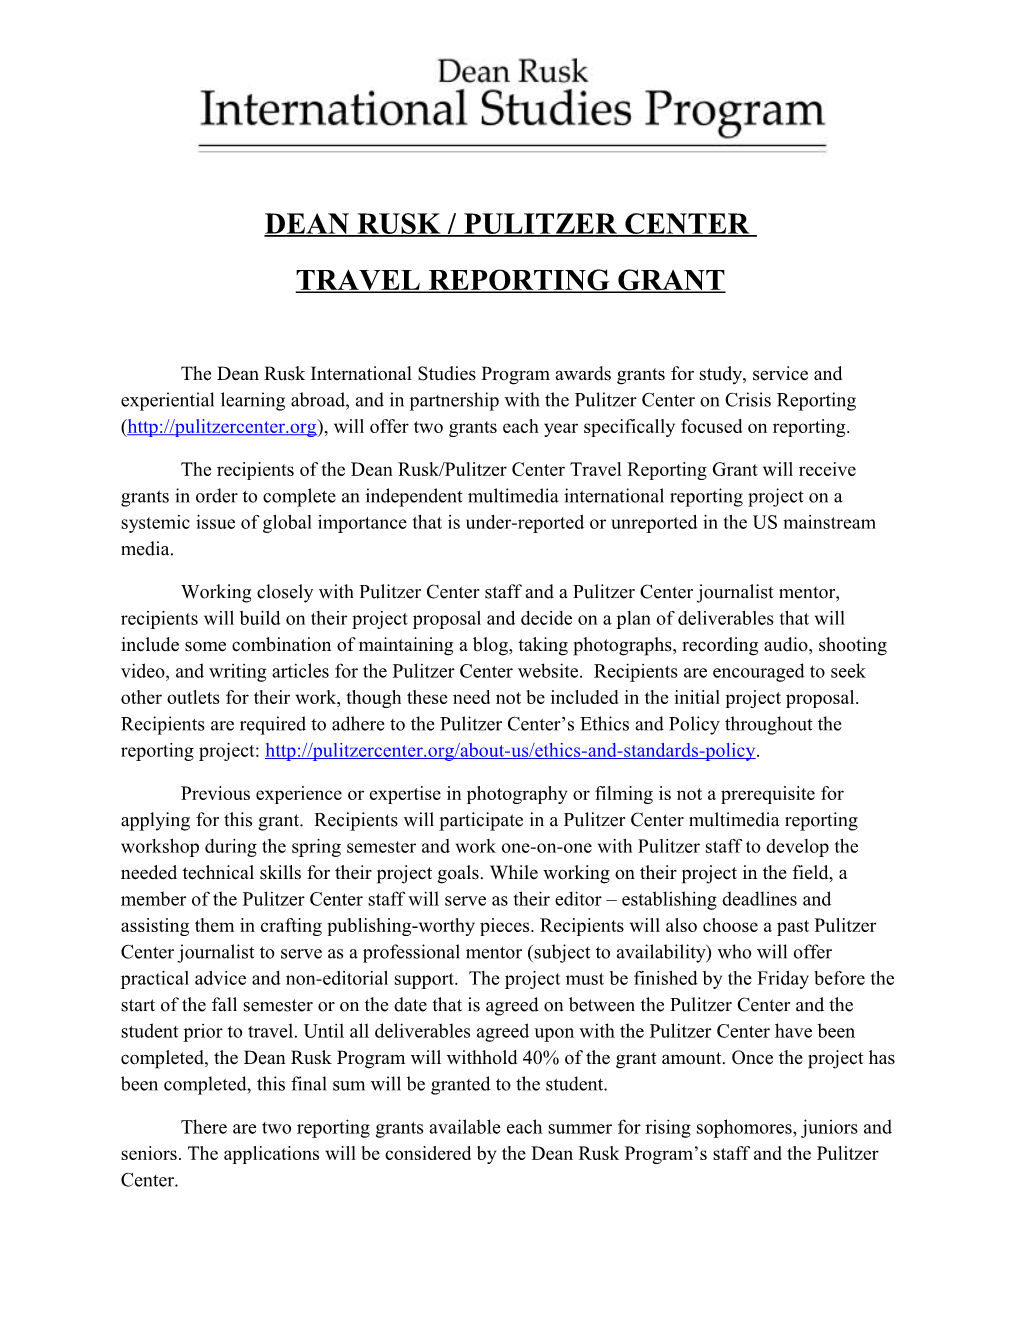 Dean Rusk/Pulitzer Center Travel Reporting Grant